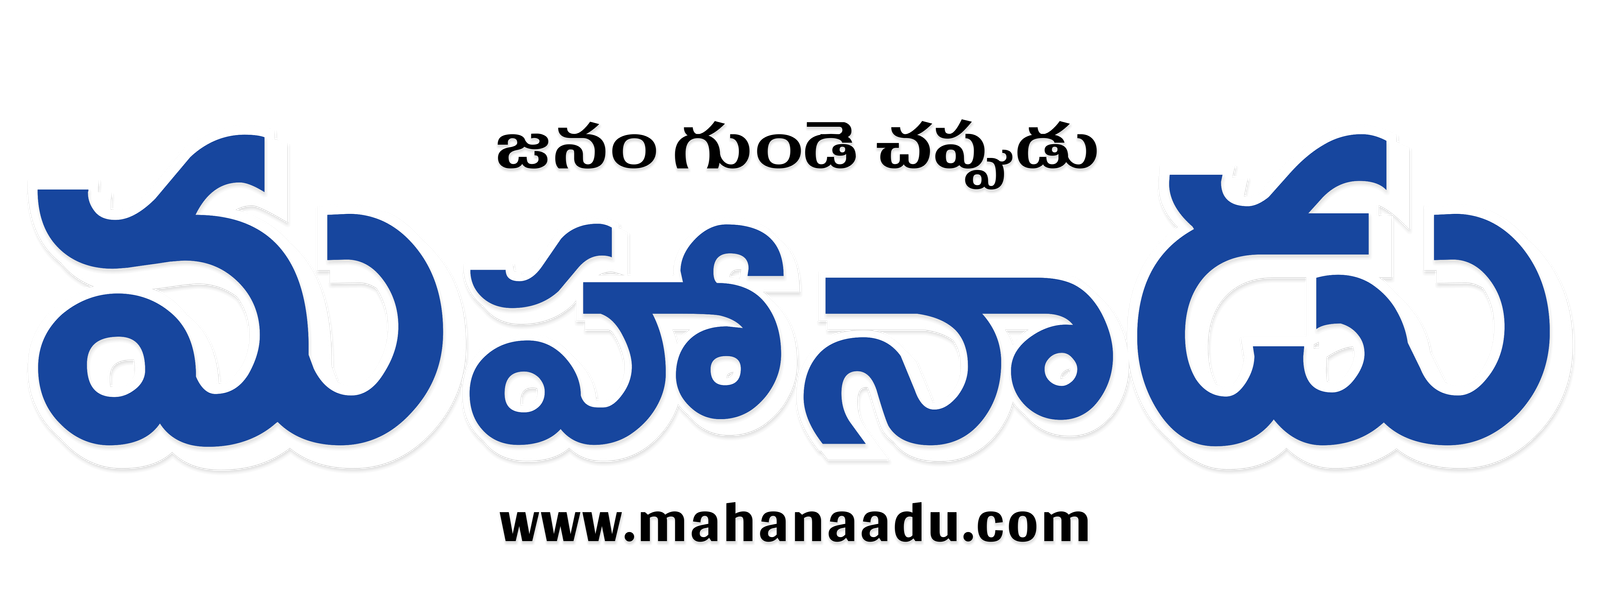 Mahanaadu-Logo-PNG-Large